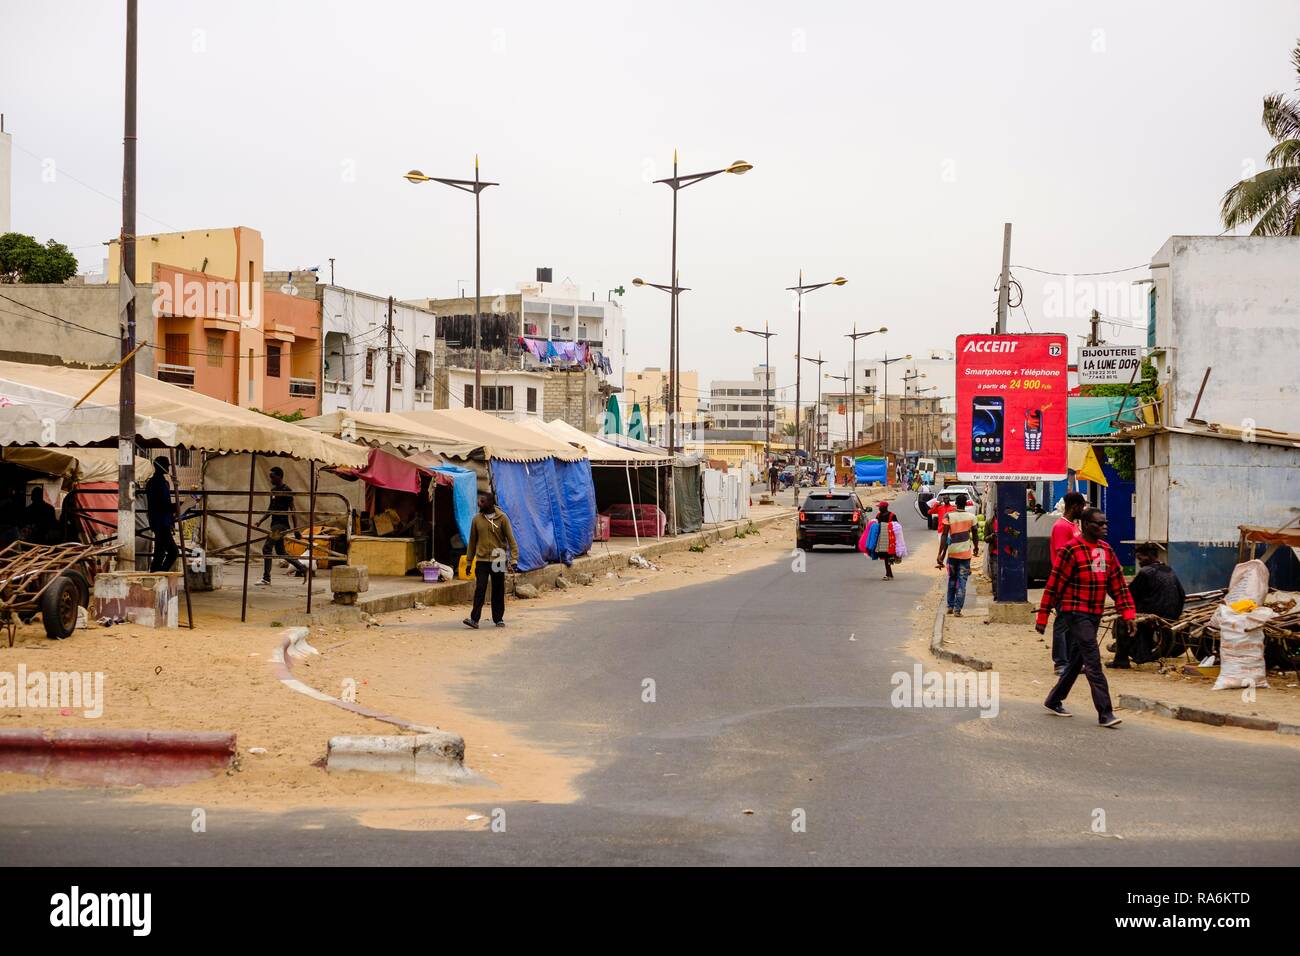 Street scene, Dakar, Senegal Stock Photo